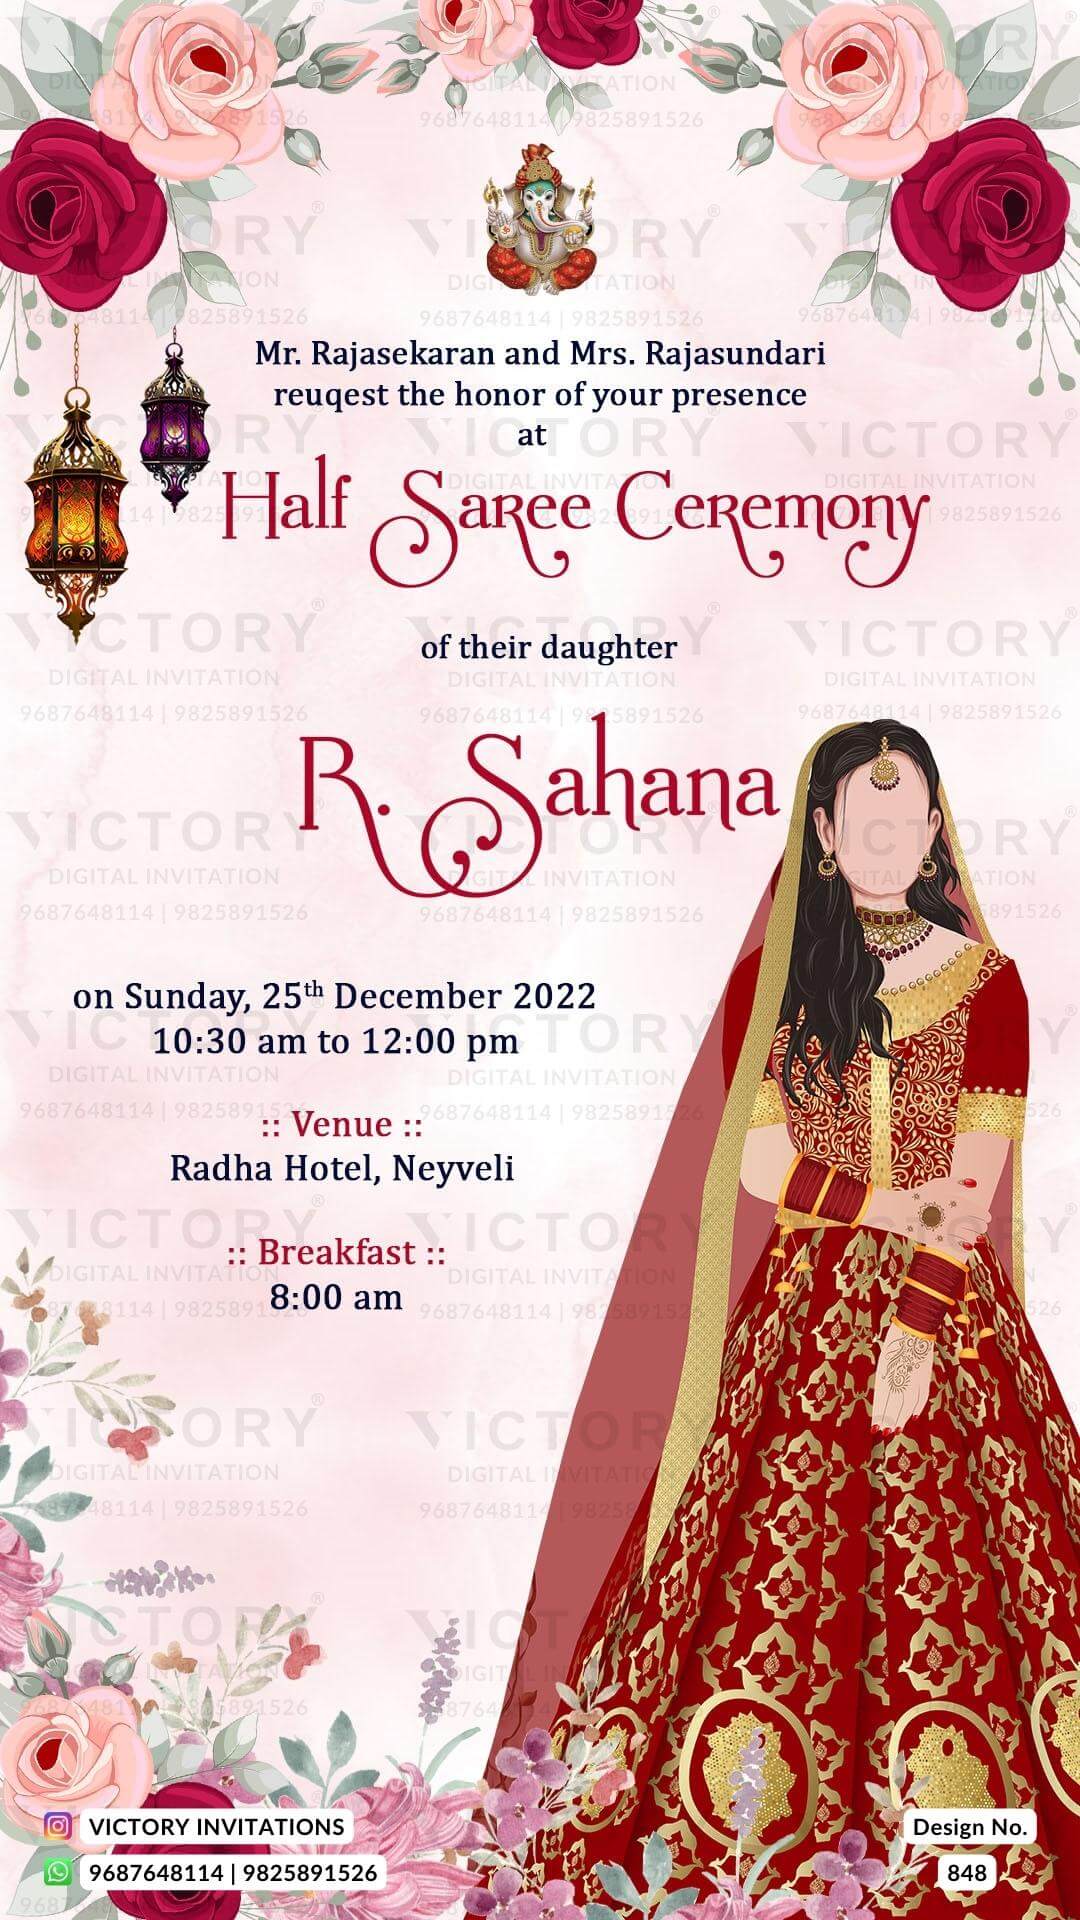 Half Saree Ceremony digital invitation card design no.848